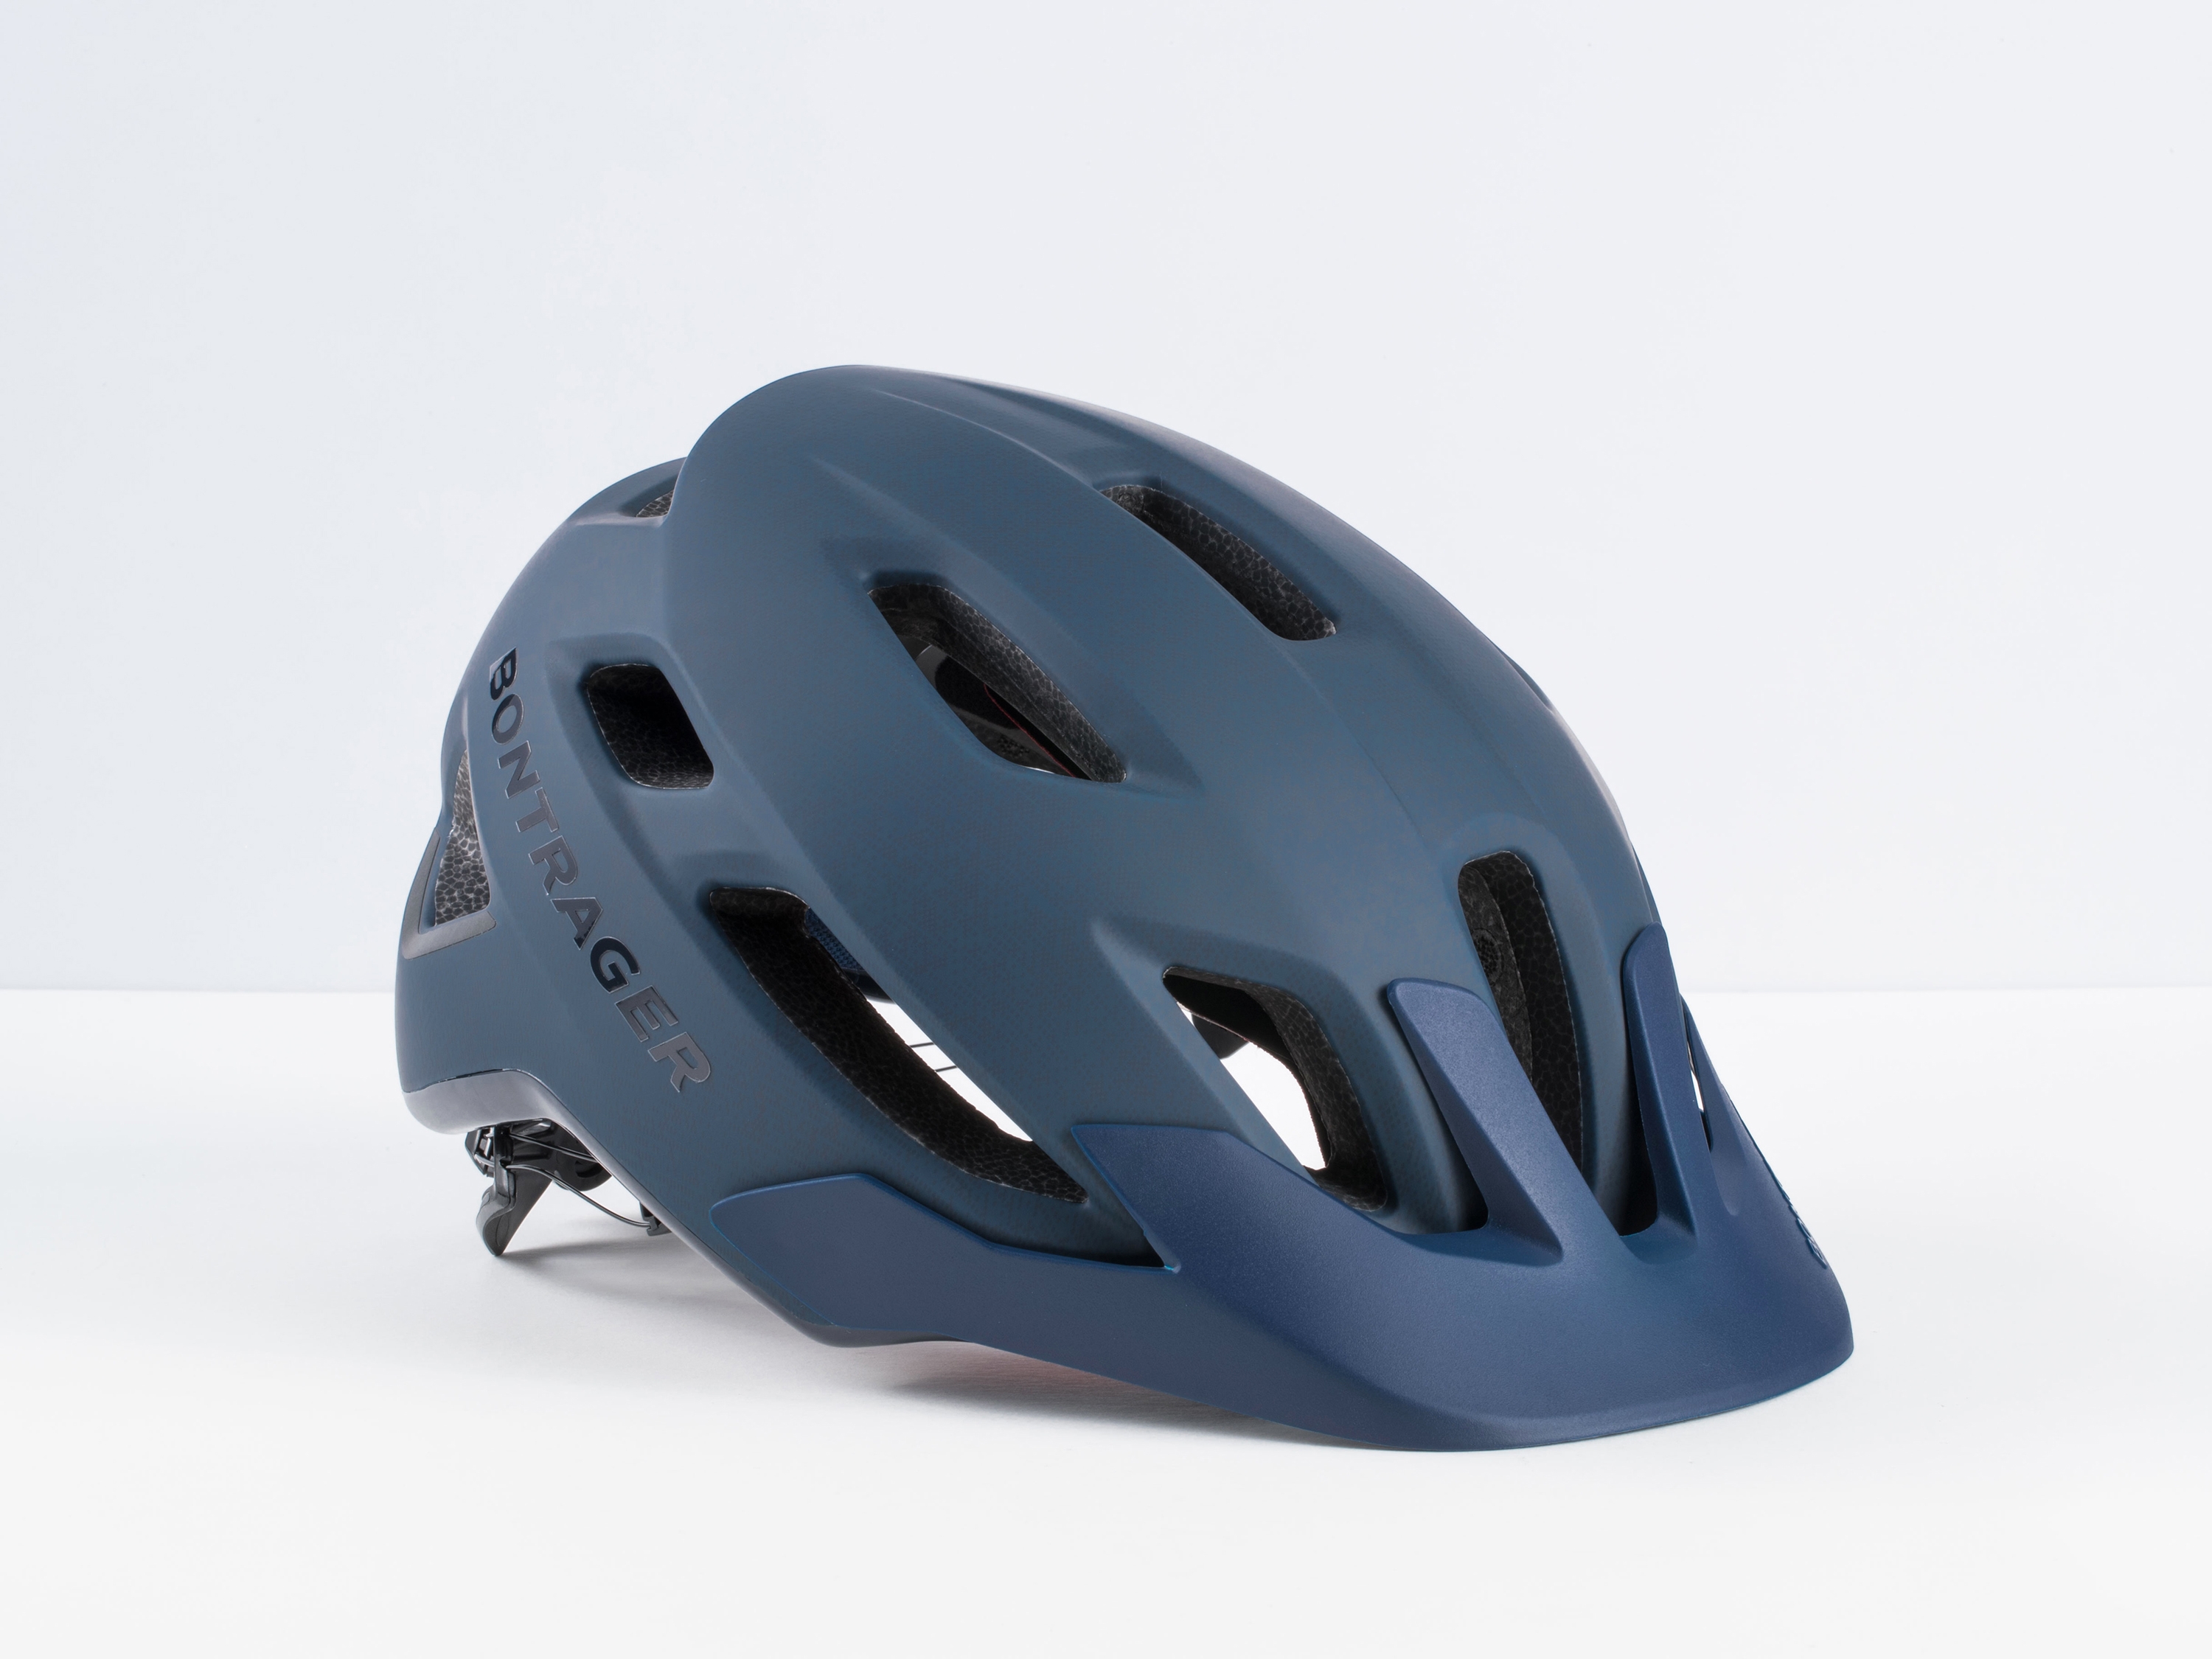 bontrager quantum bicycle bike helmet